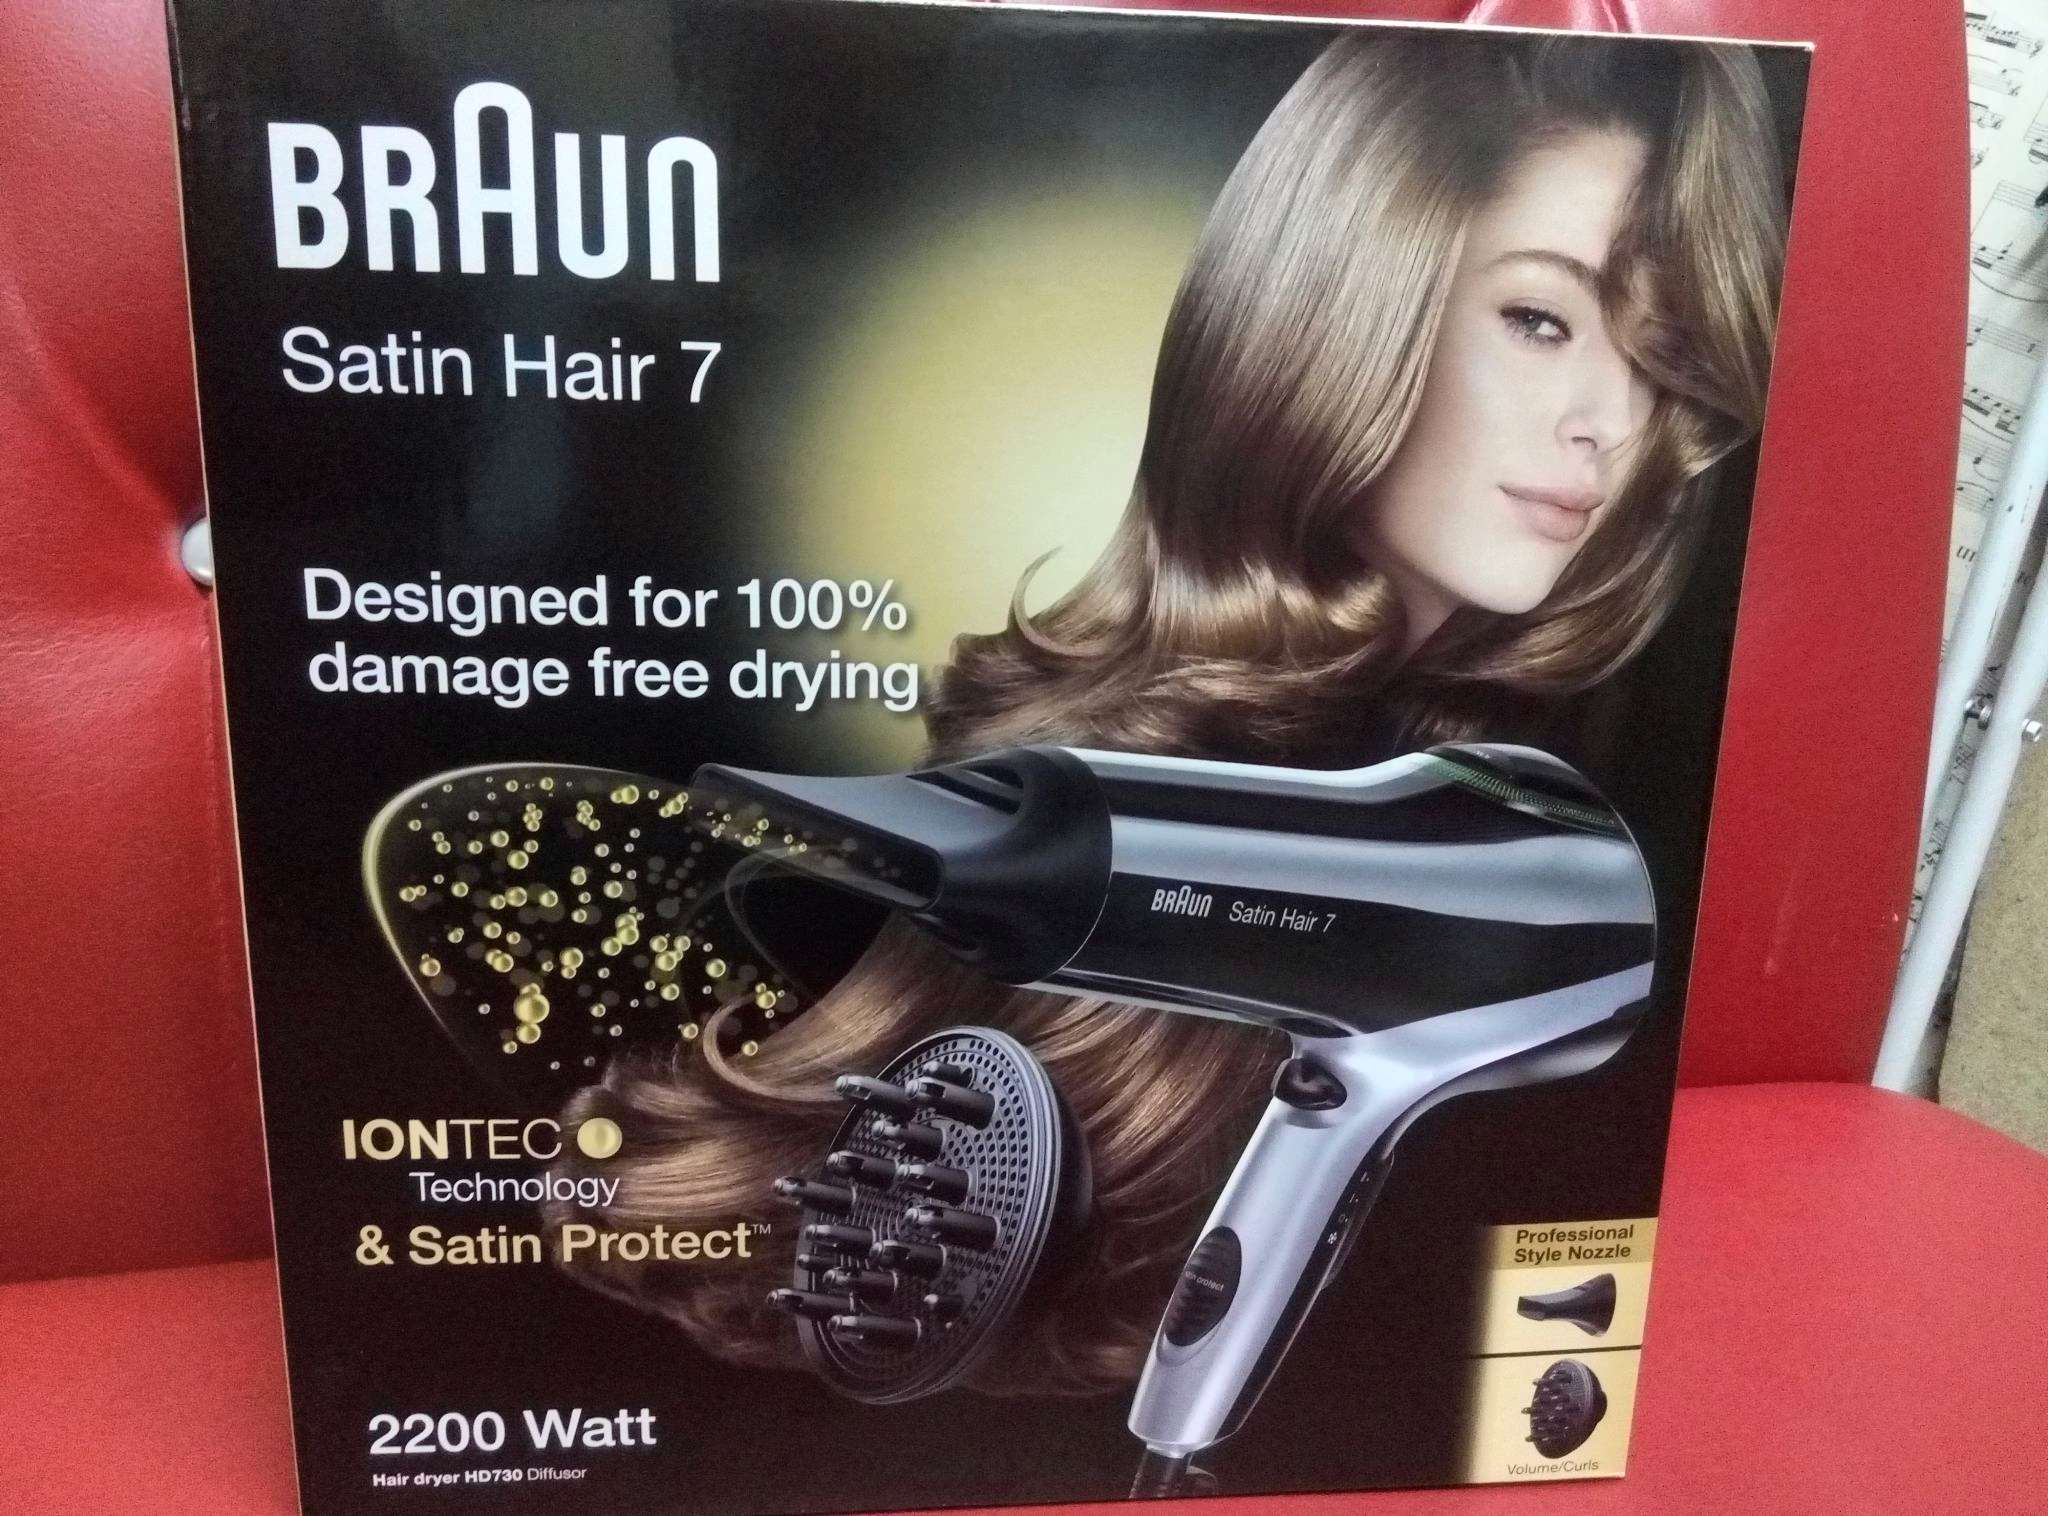 Фен braun satin hair 7 как пользоваться